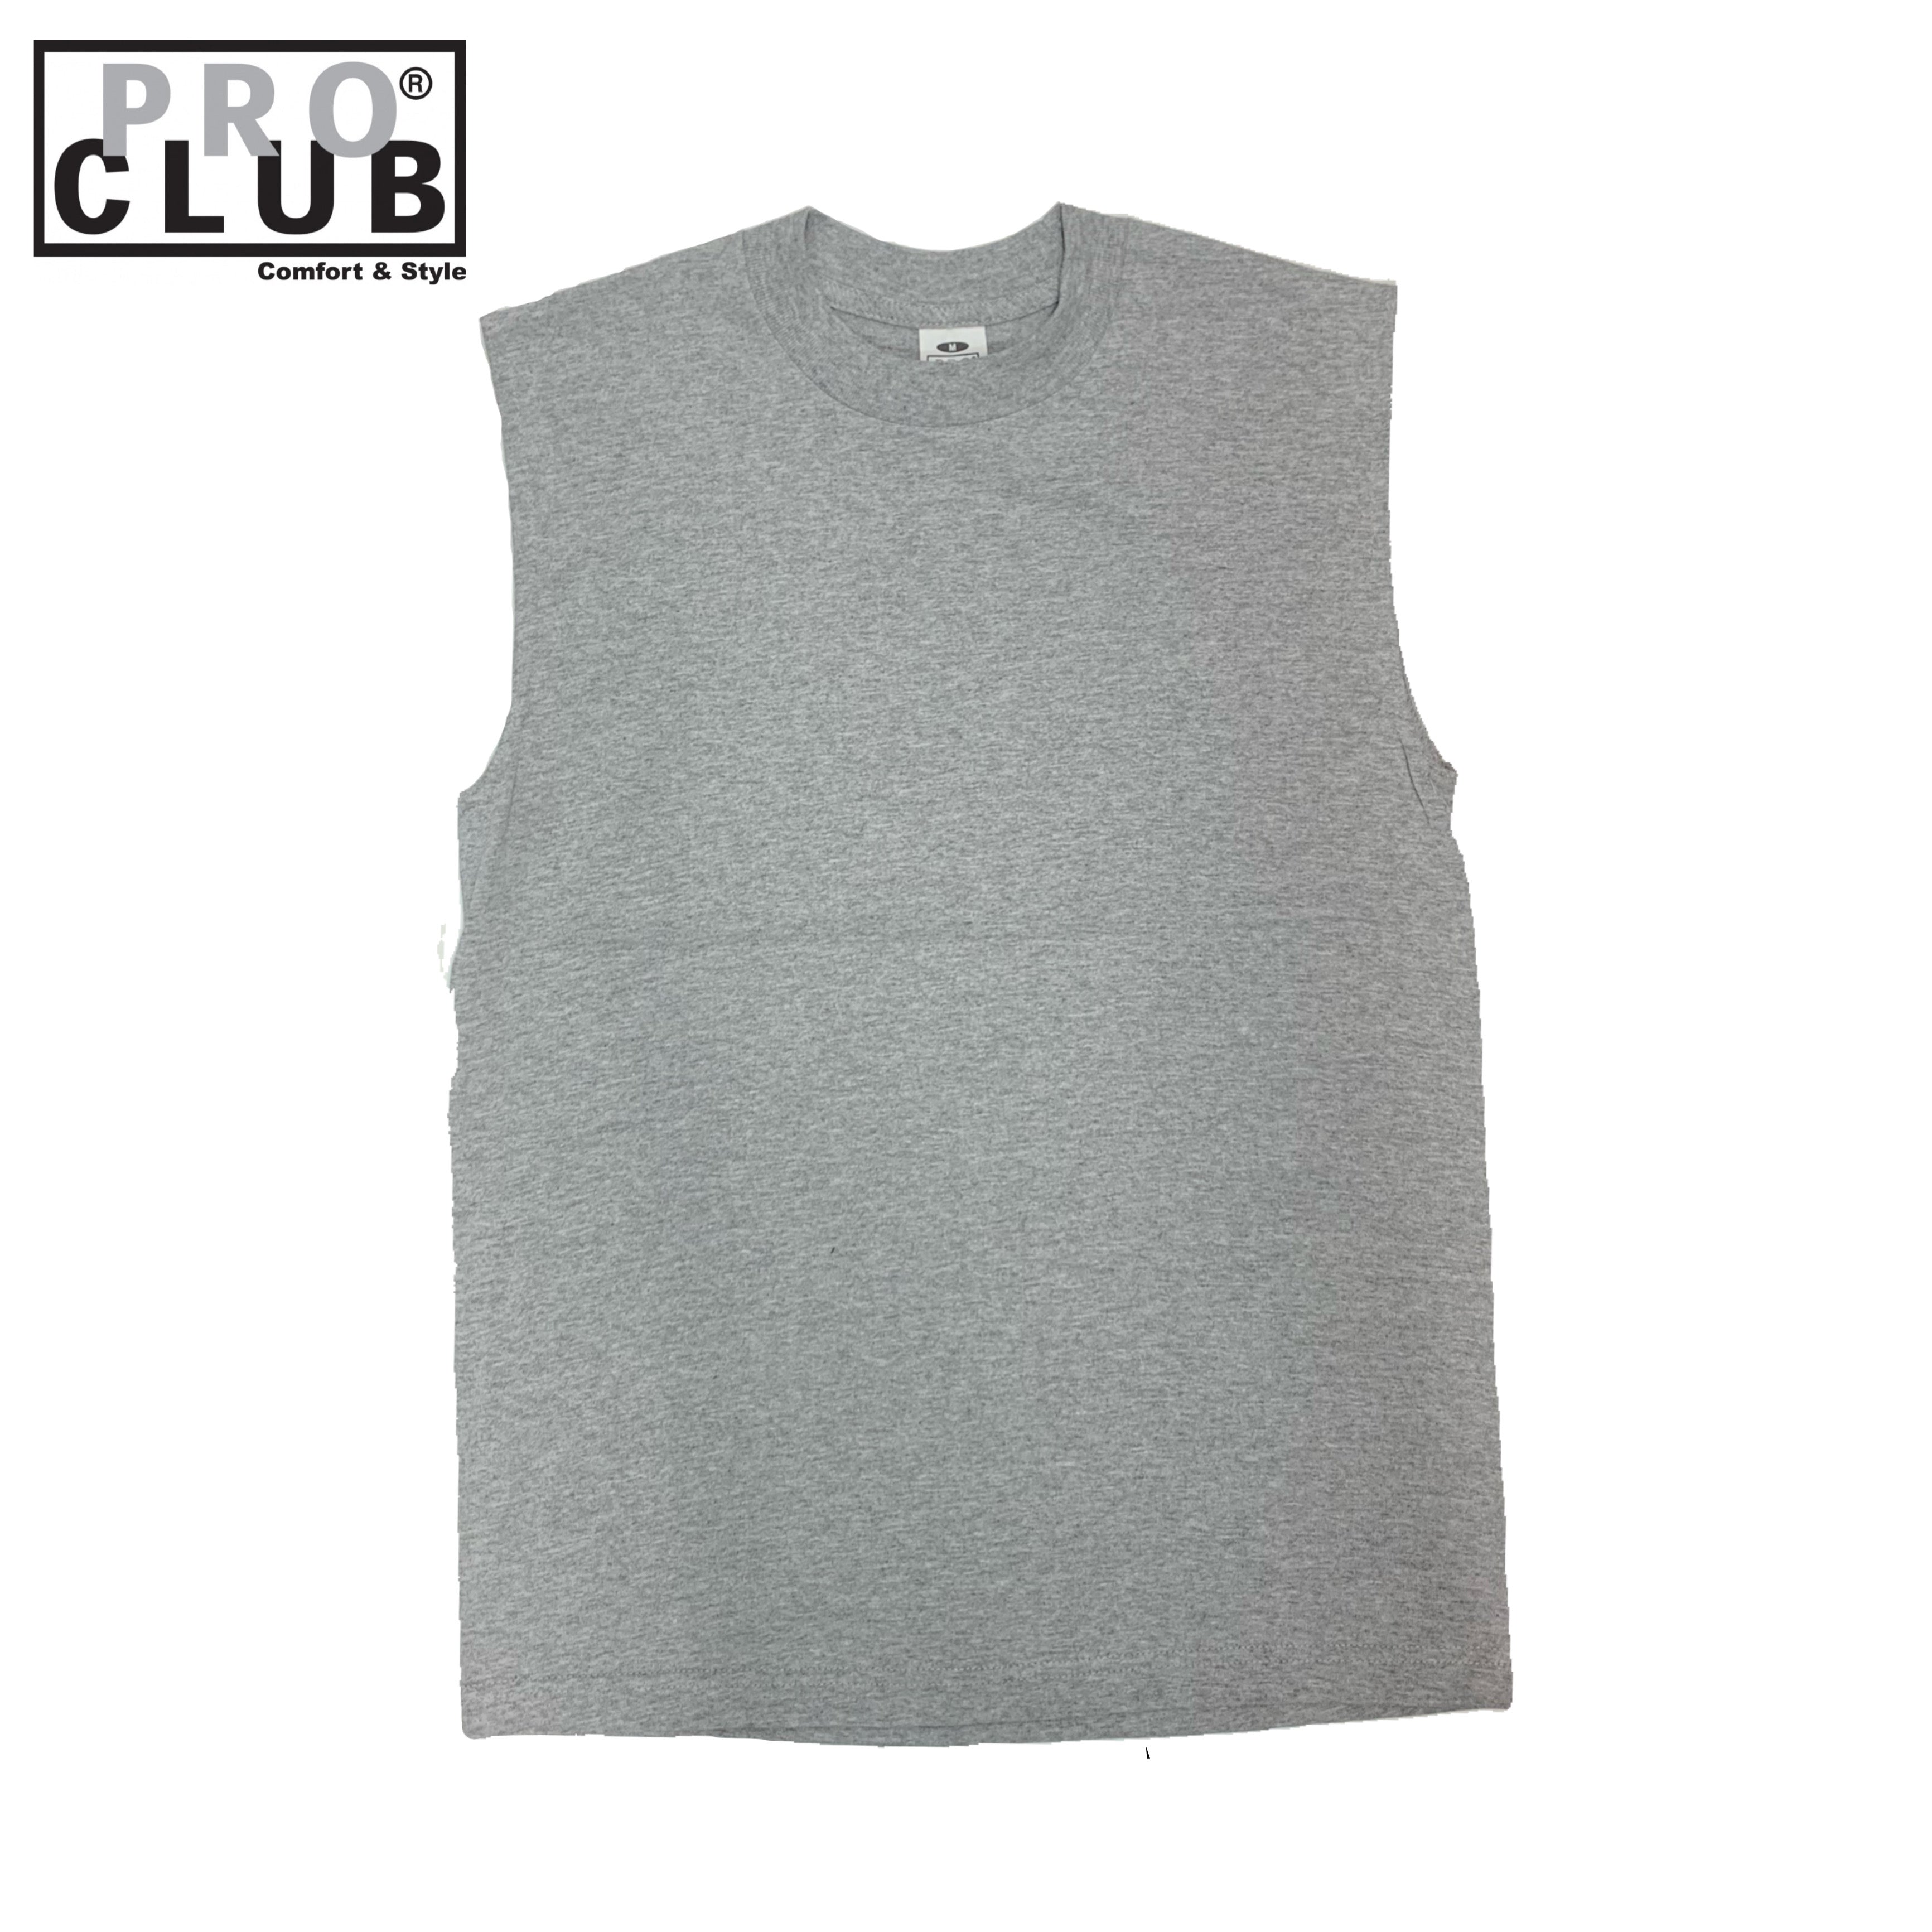 Pro Club Men's Heavyweight Cotton Short Sleeve Crew Neck T-Shirt - Sky